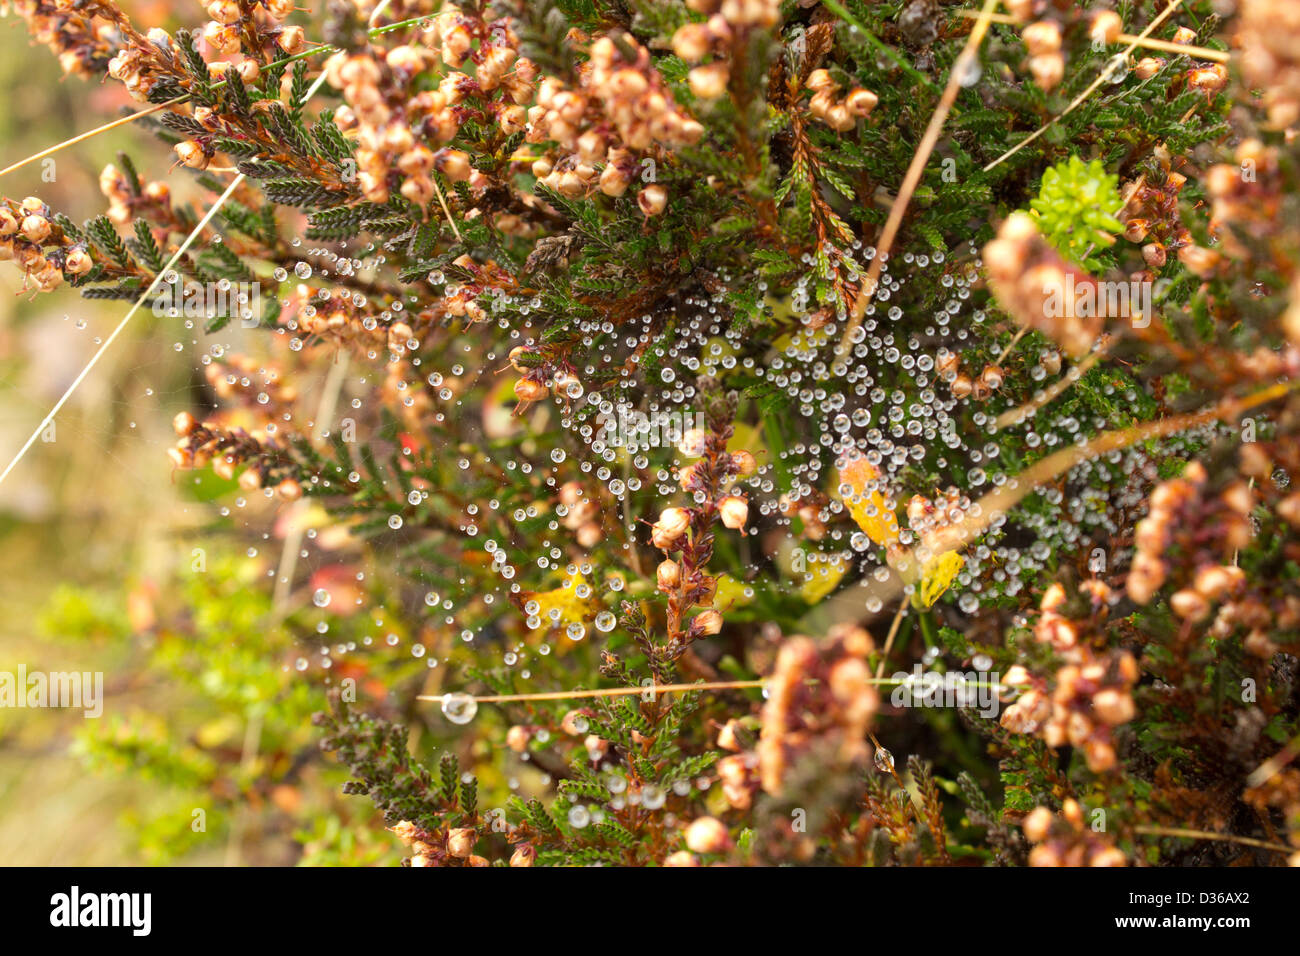 Spider bath - Fantastic showcase of dew drops in a spider web. Autumn / Fall days Stock Photo